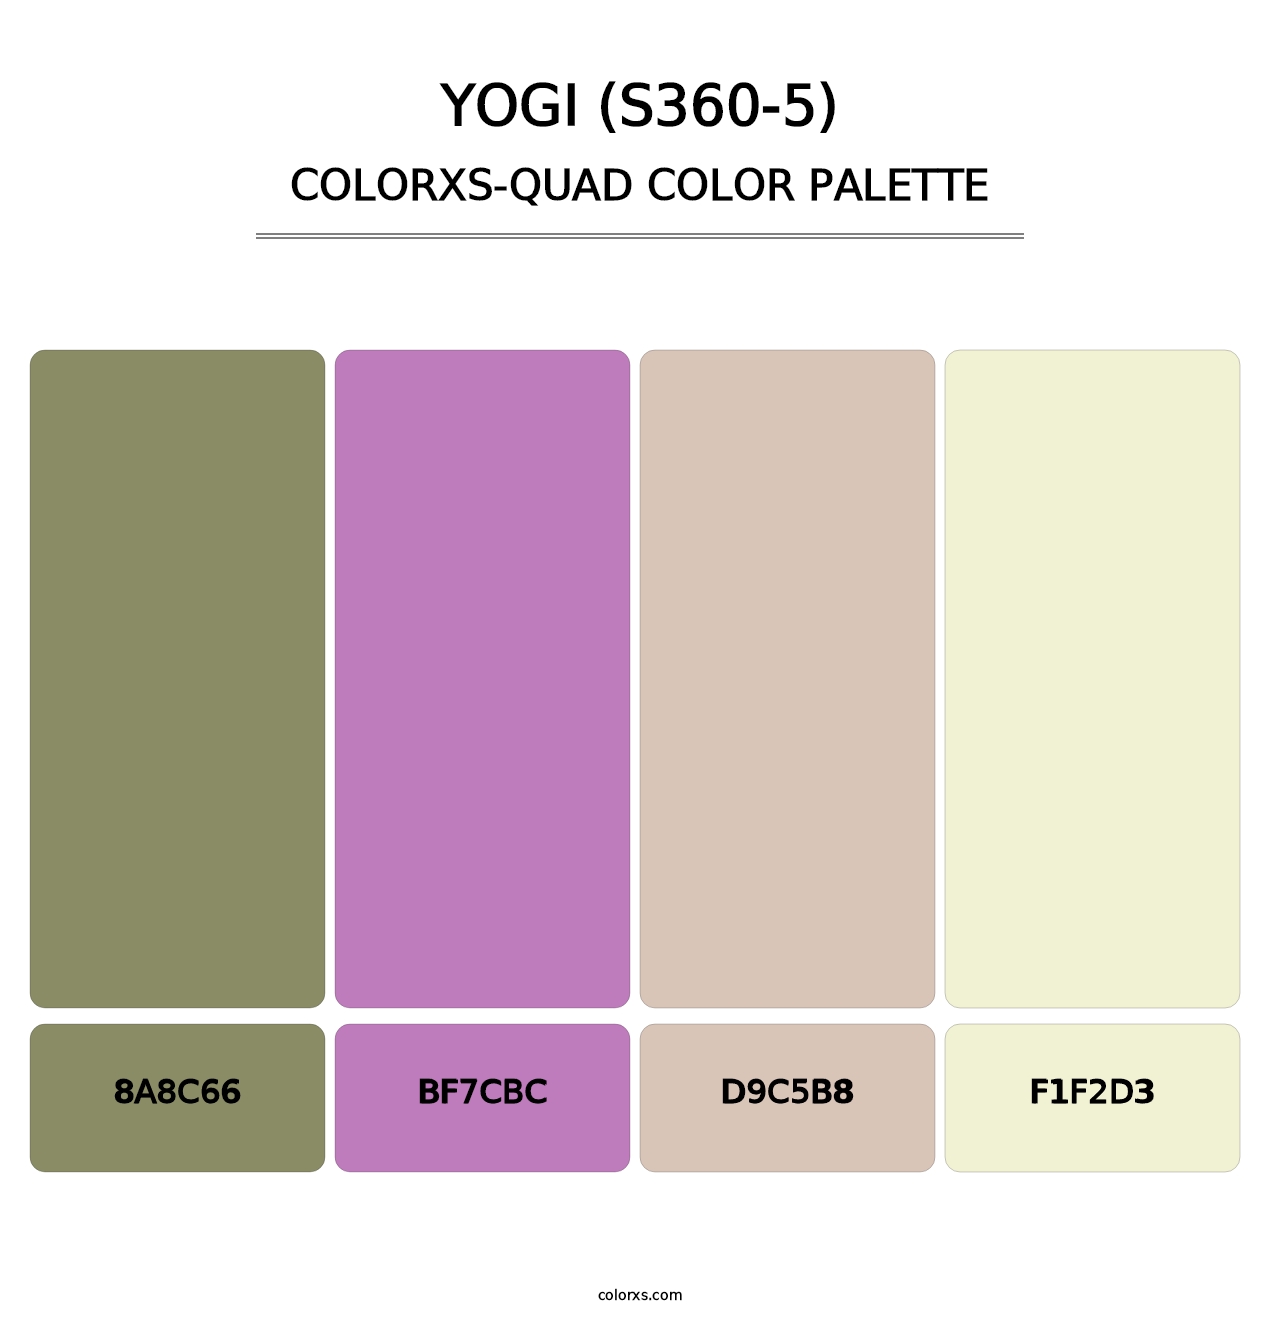 Yogi (S360-5) - Colorxs Quad Palette